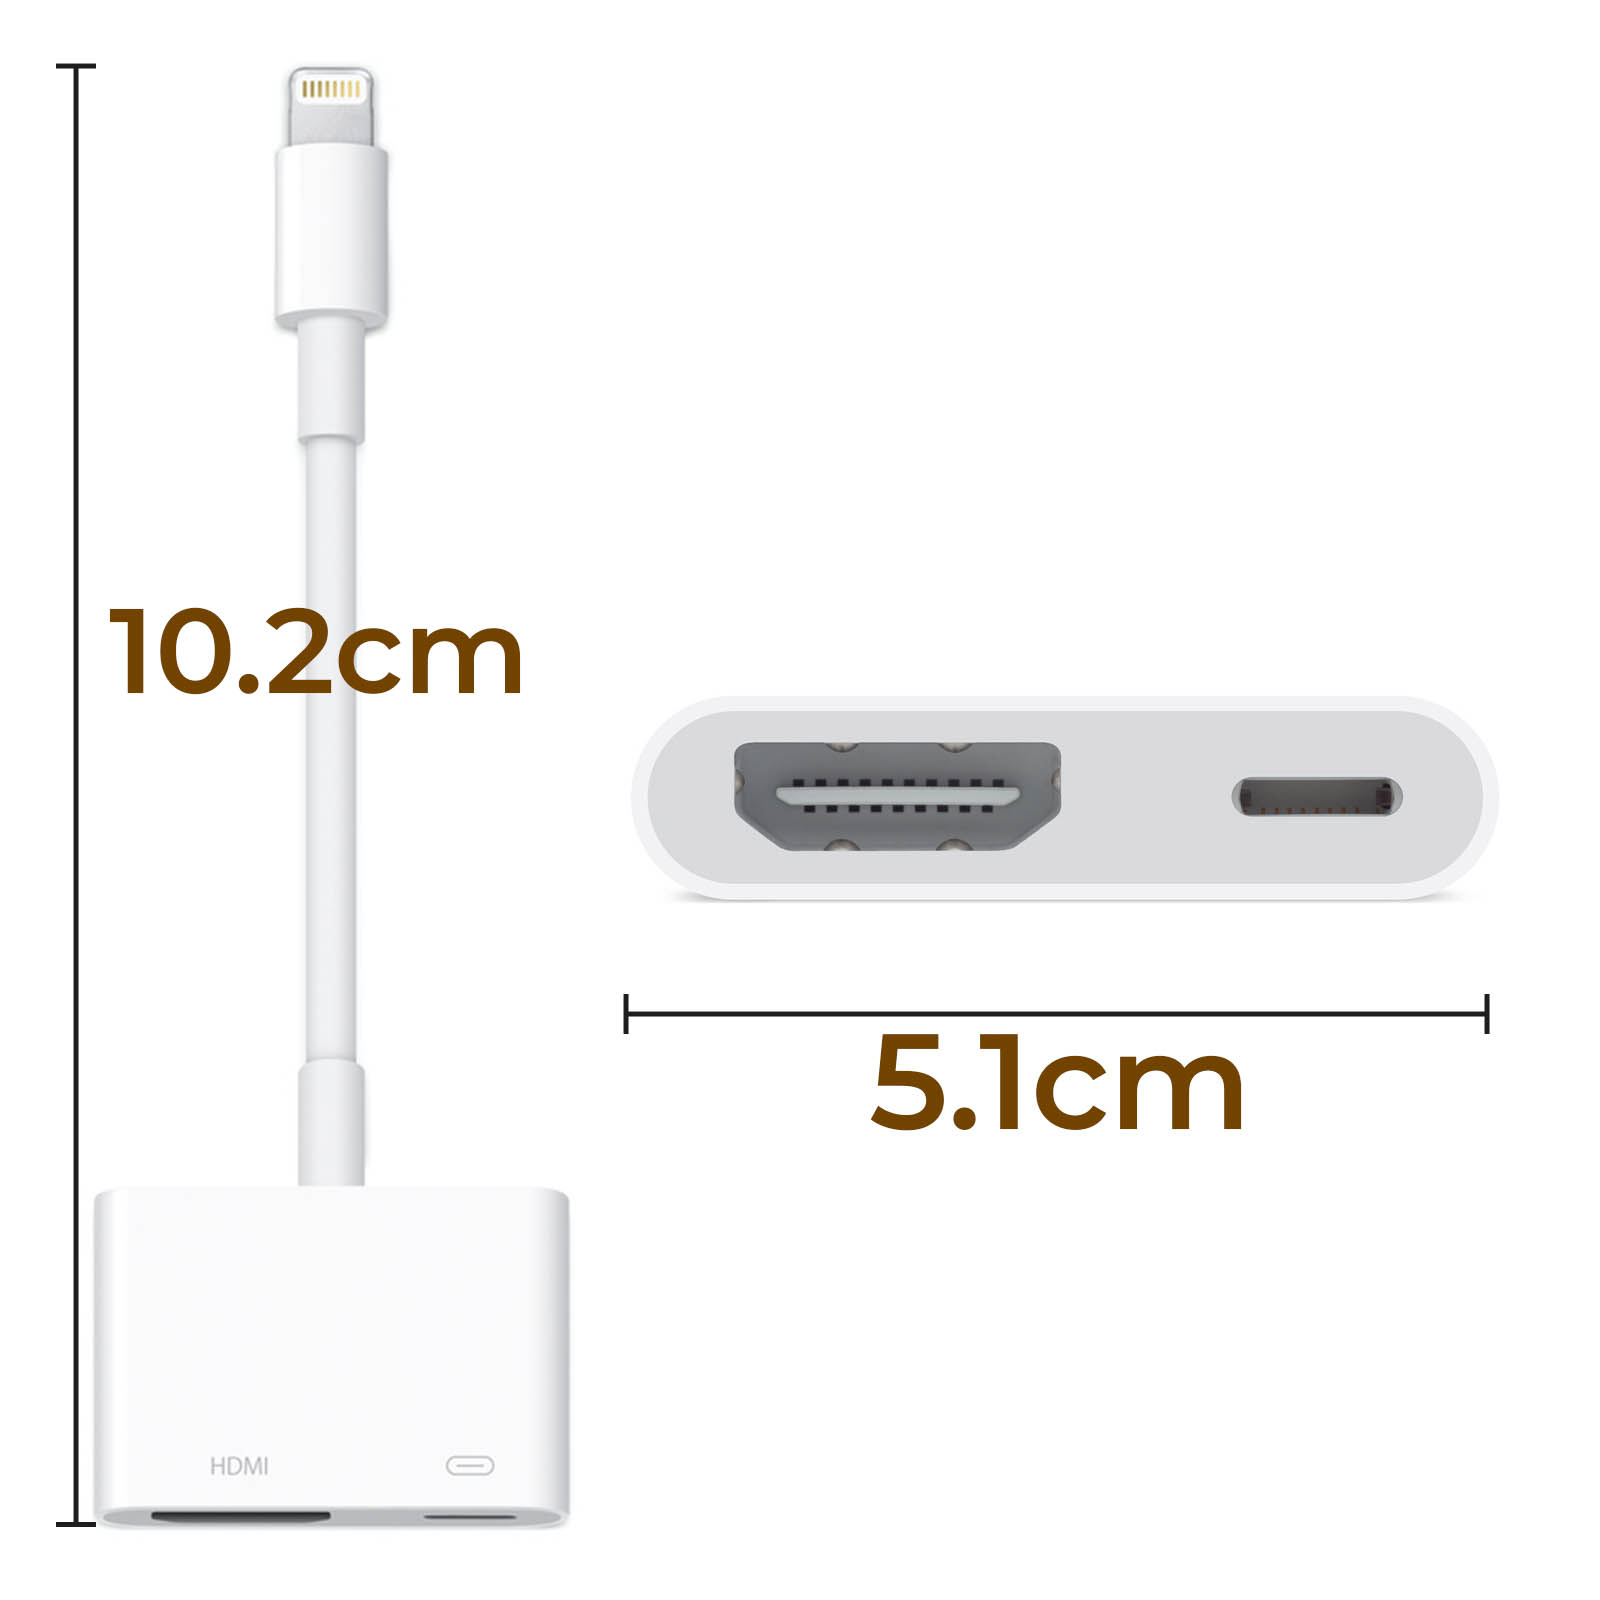 Adaptateur HDMI Original Apple pour iPhone / iPad, Full HD 1080p